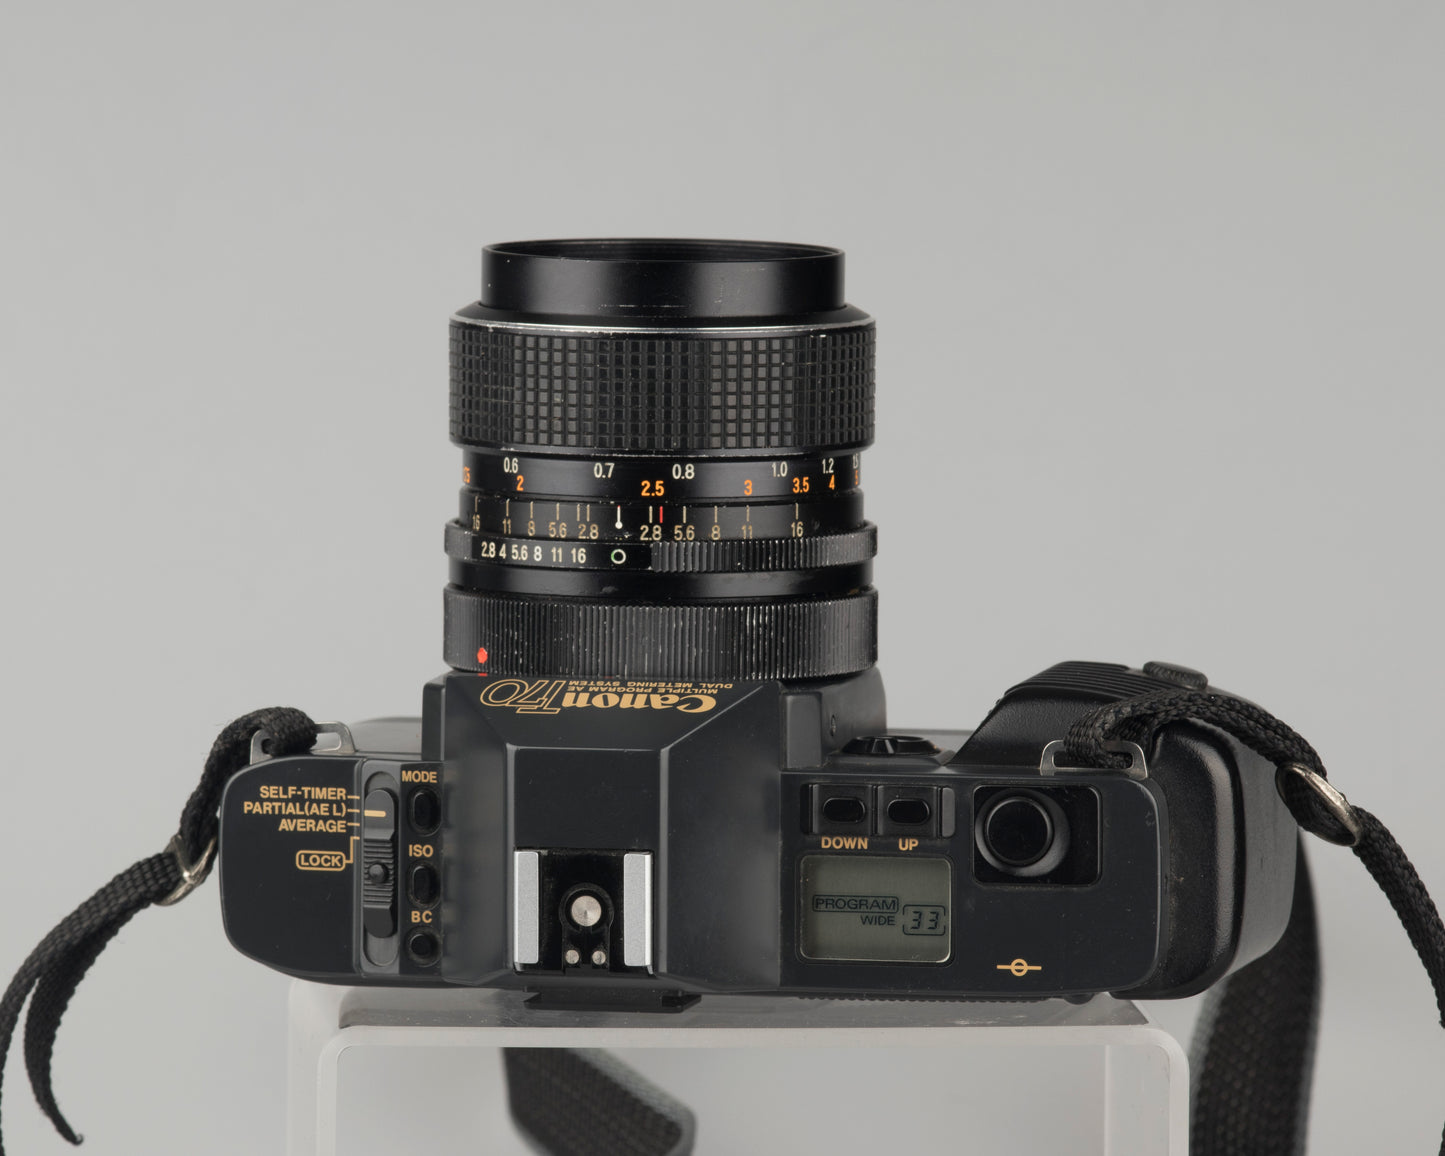 Canon T70 35 mm SLR avec objectif grand angle 35 mm f2.8